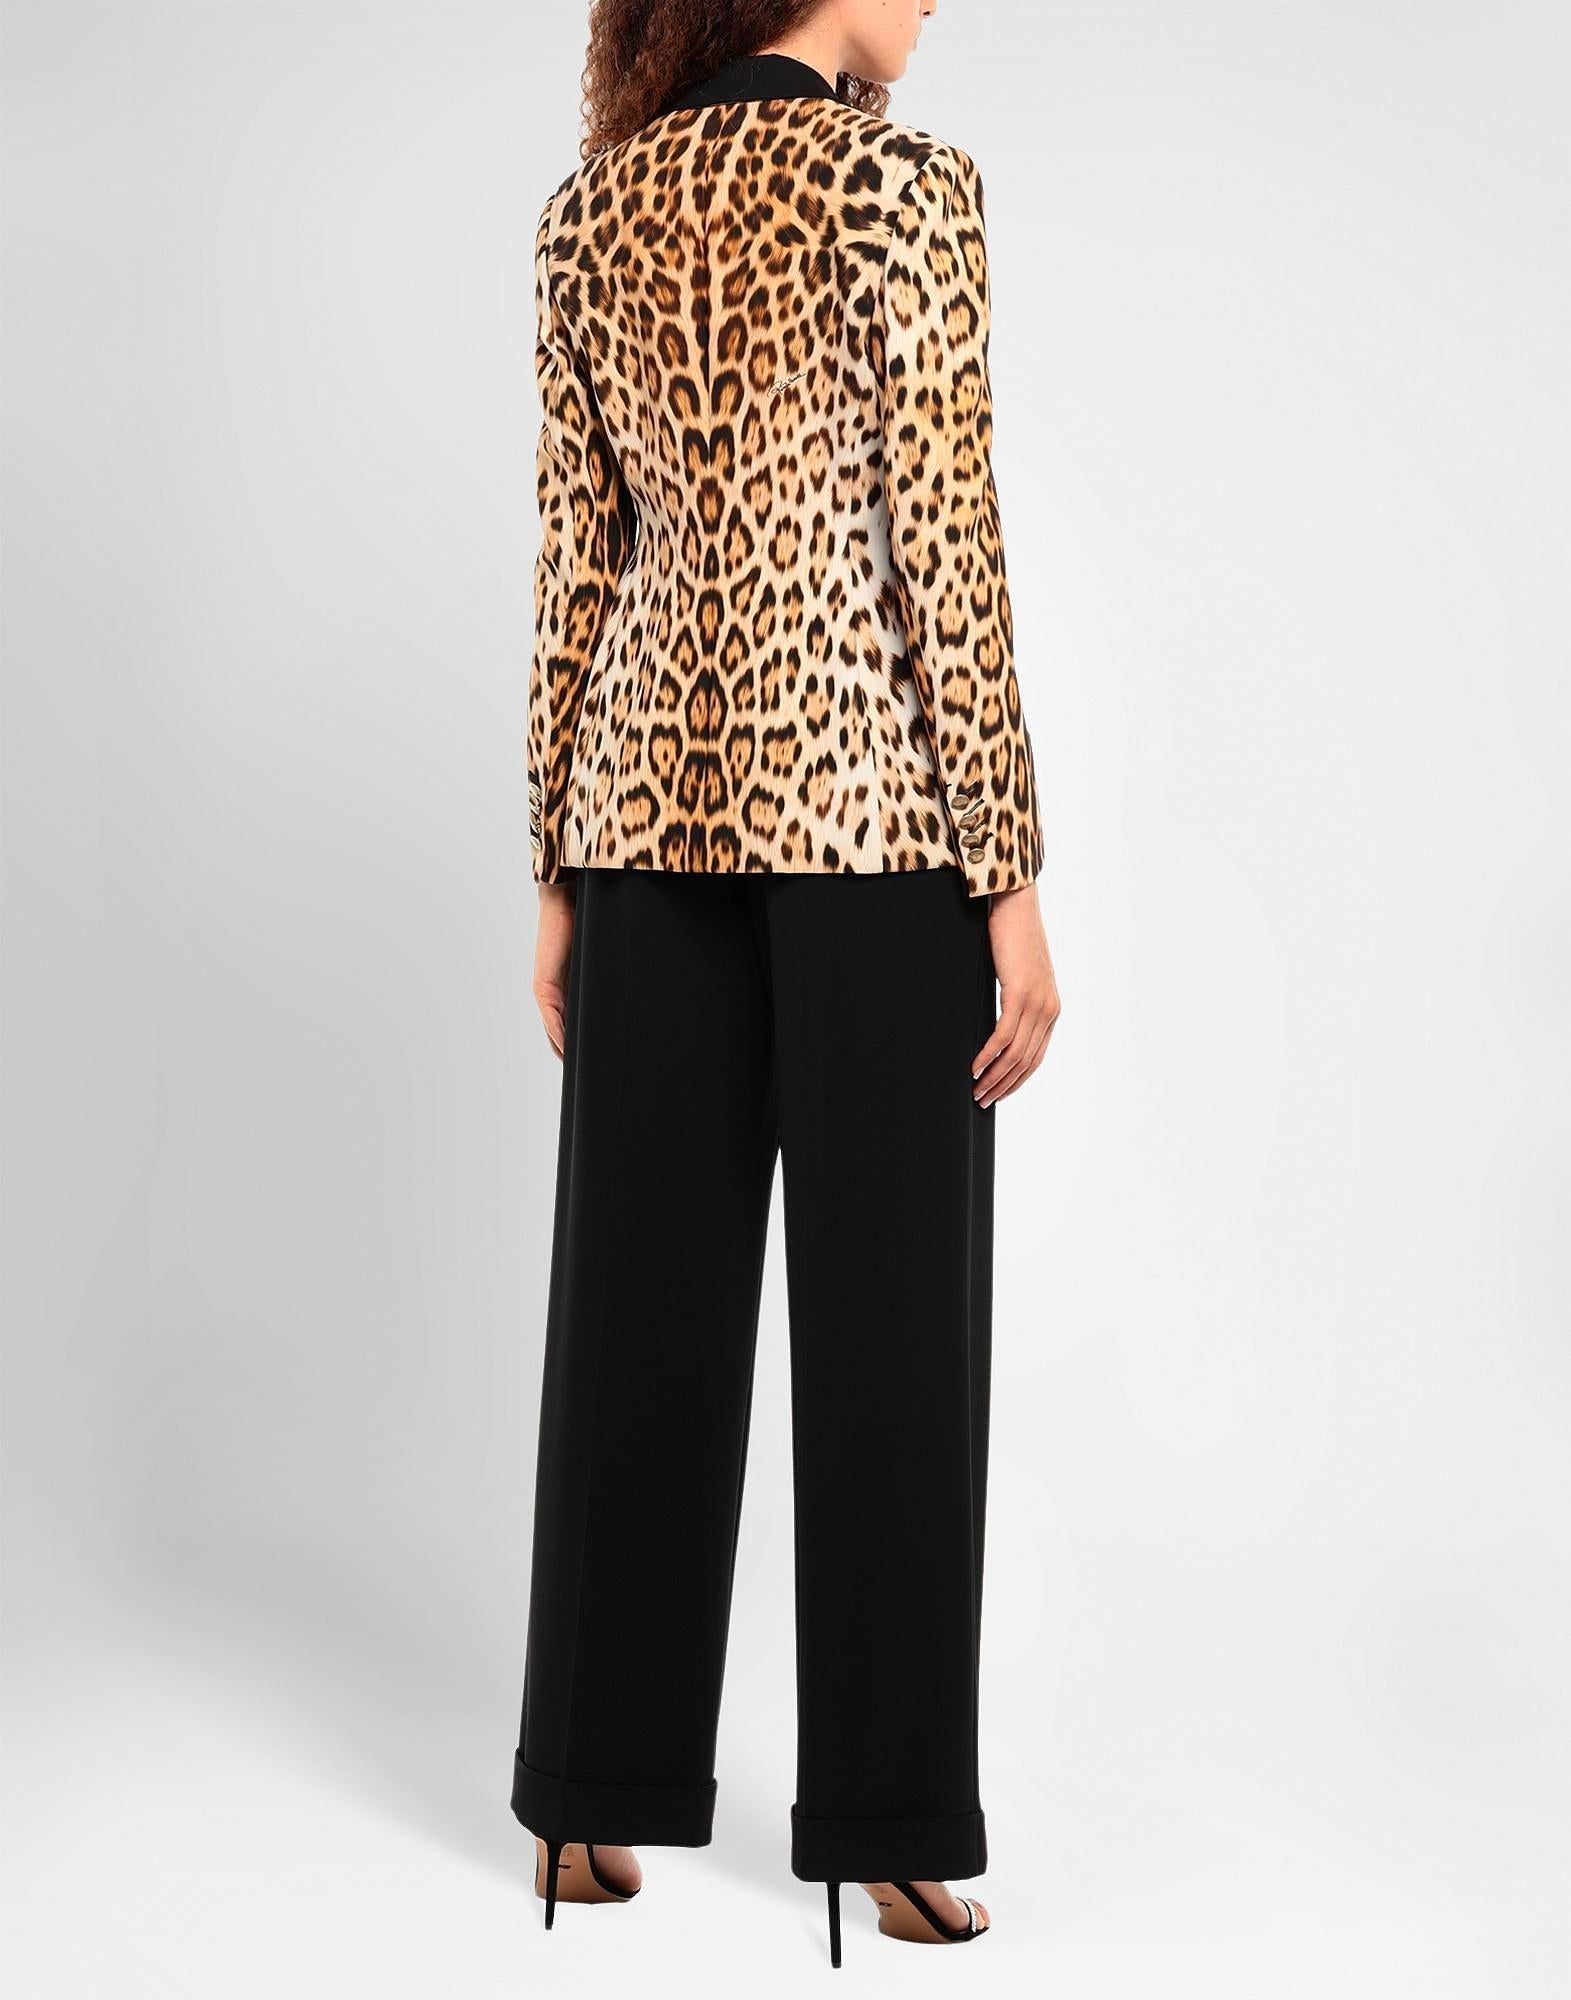 Roberto Cavalli Leopard Print Pant Suit Italian 40 For Sale 3